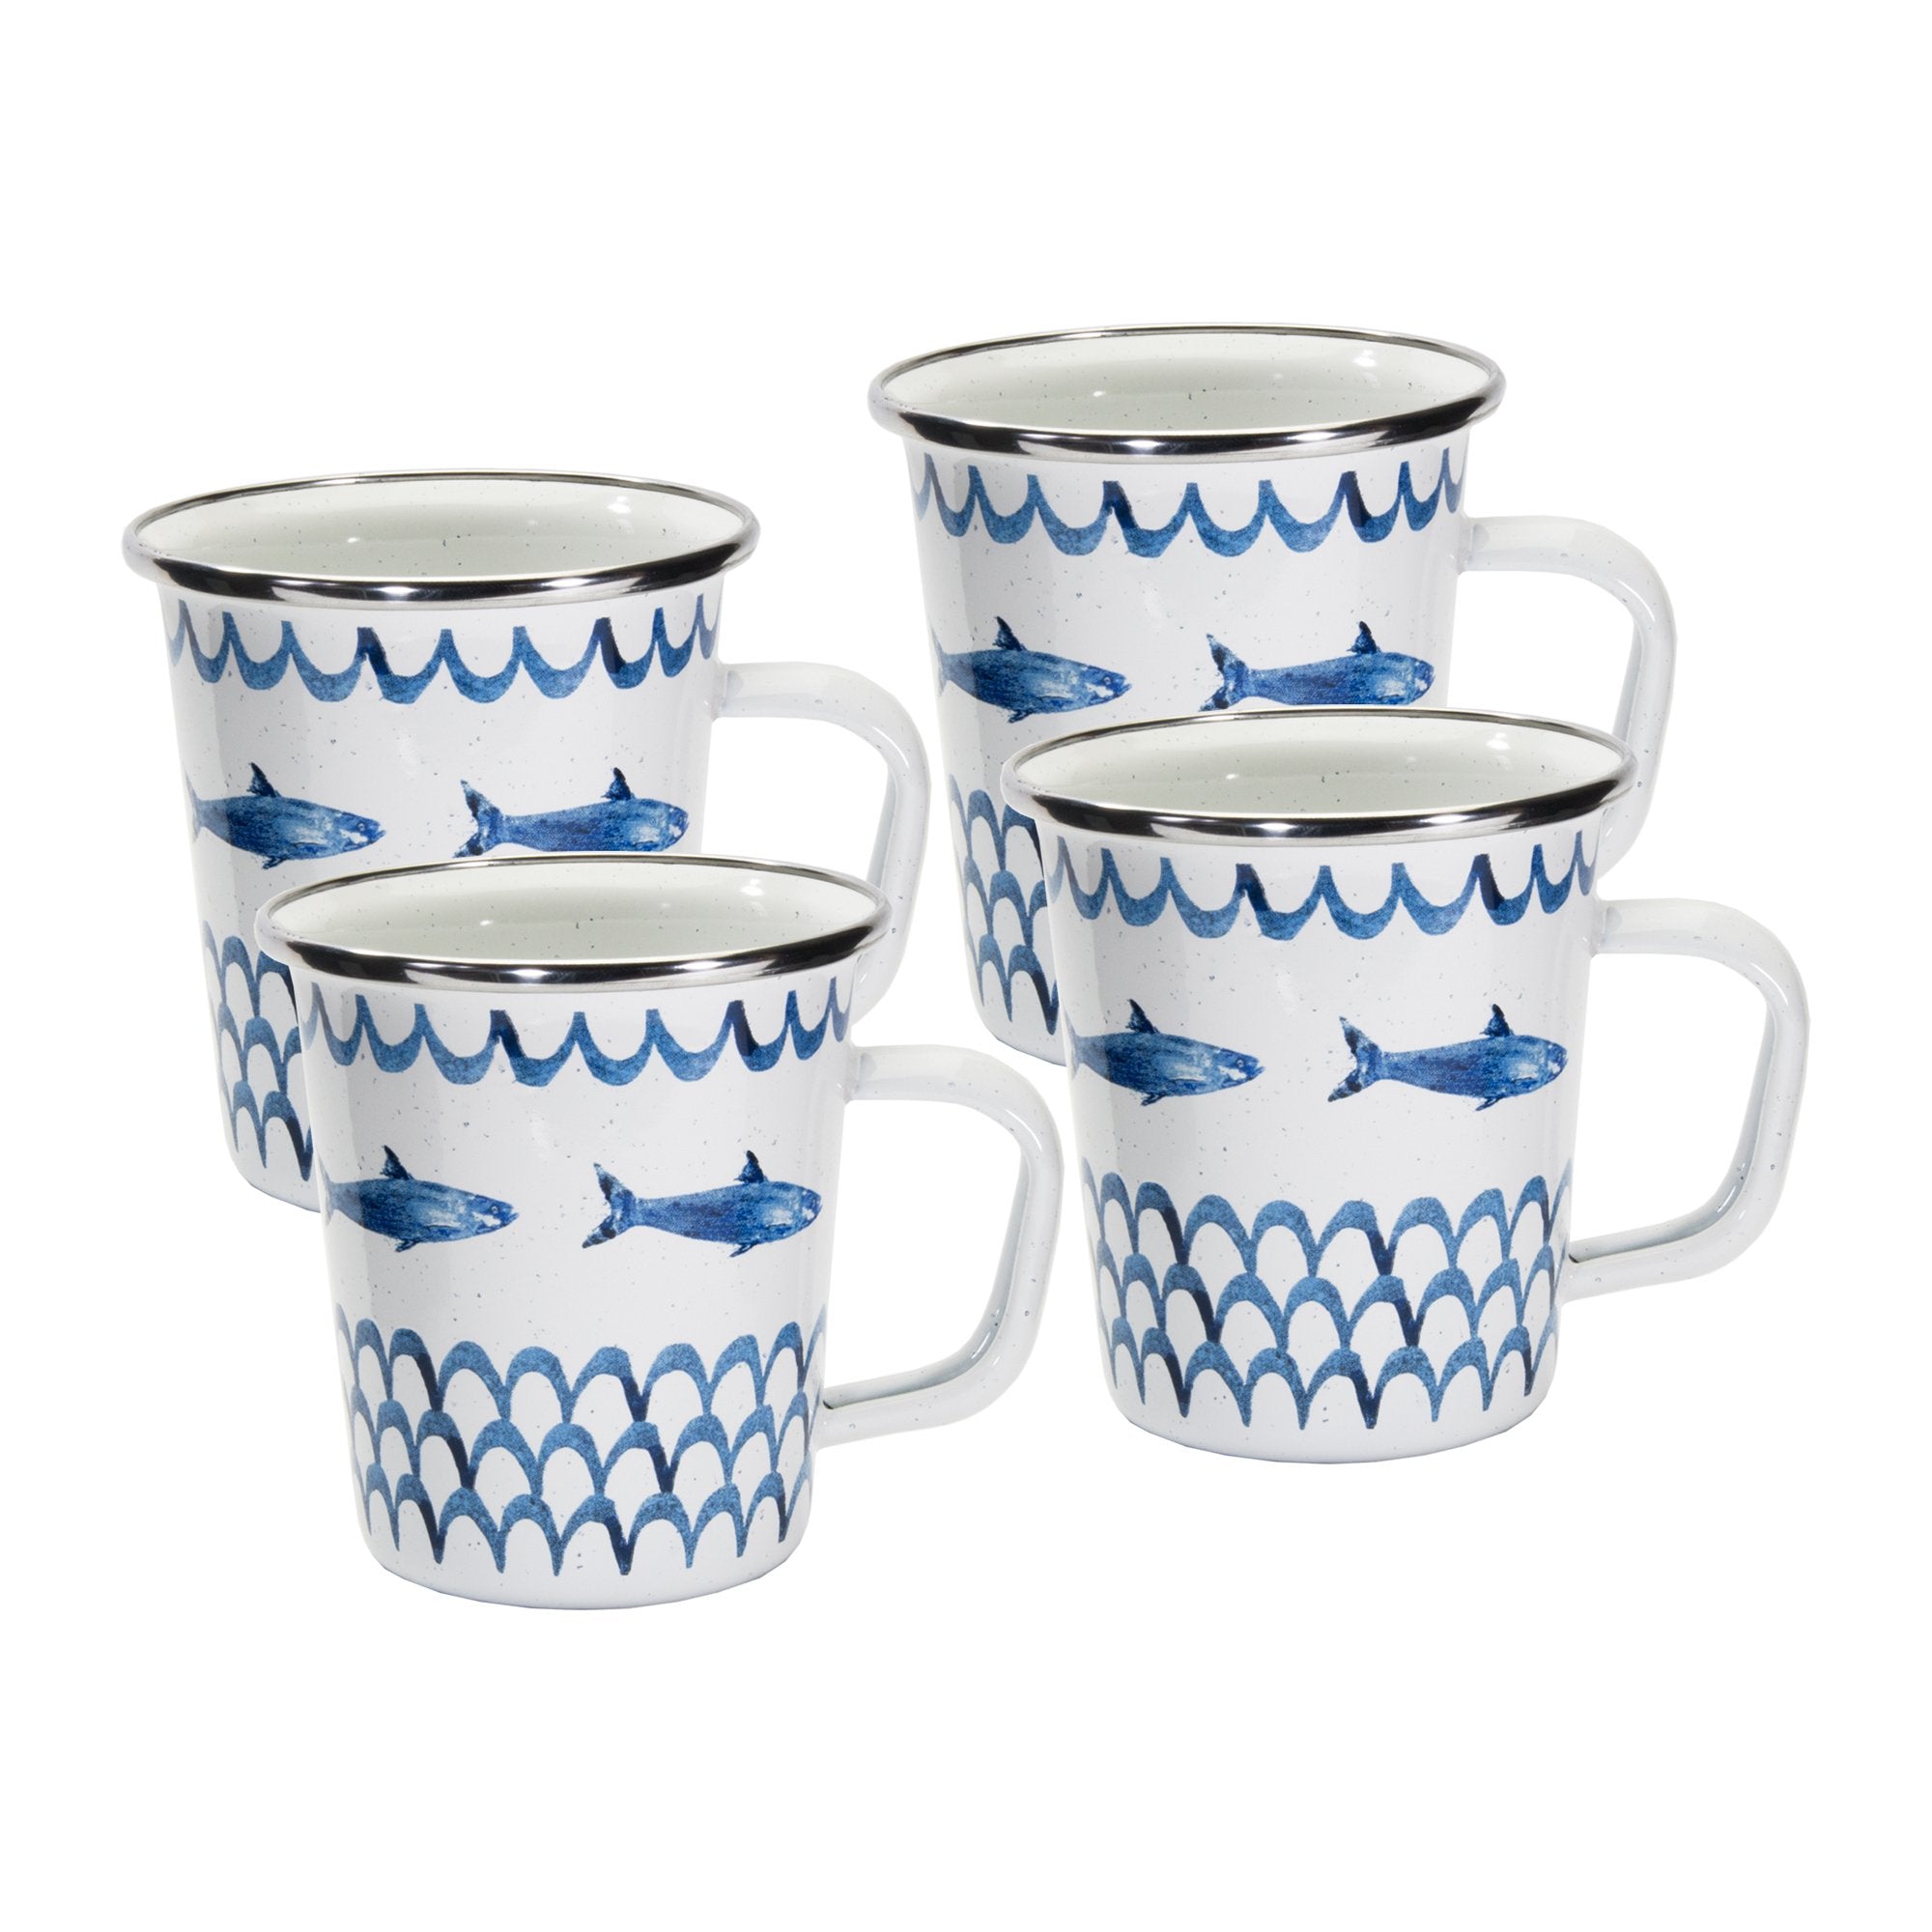 FC66S4 - Set of 4 - Fish Camp - Enamelware - Latte Mugs by Golden Rabbit